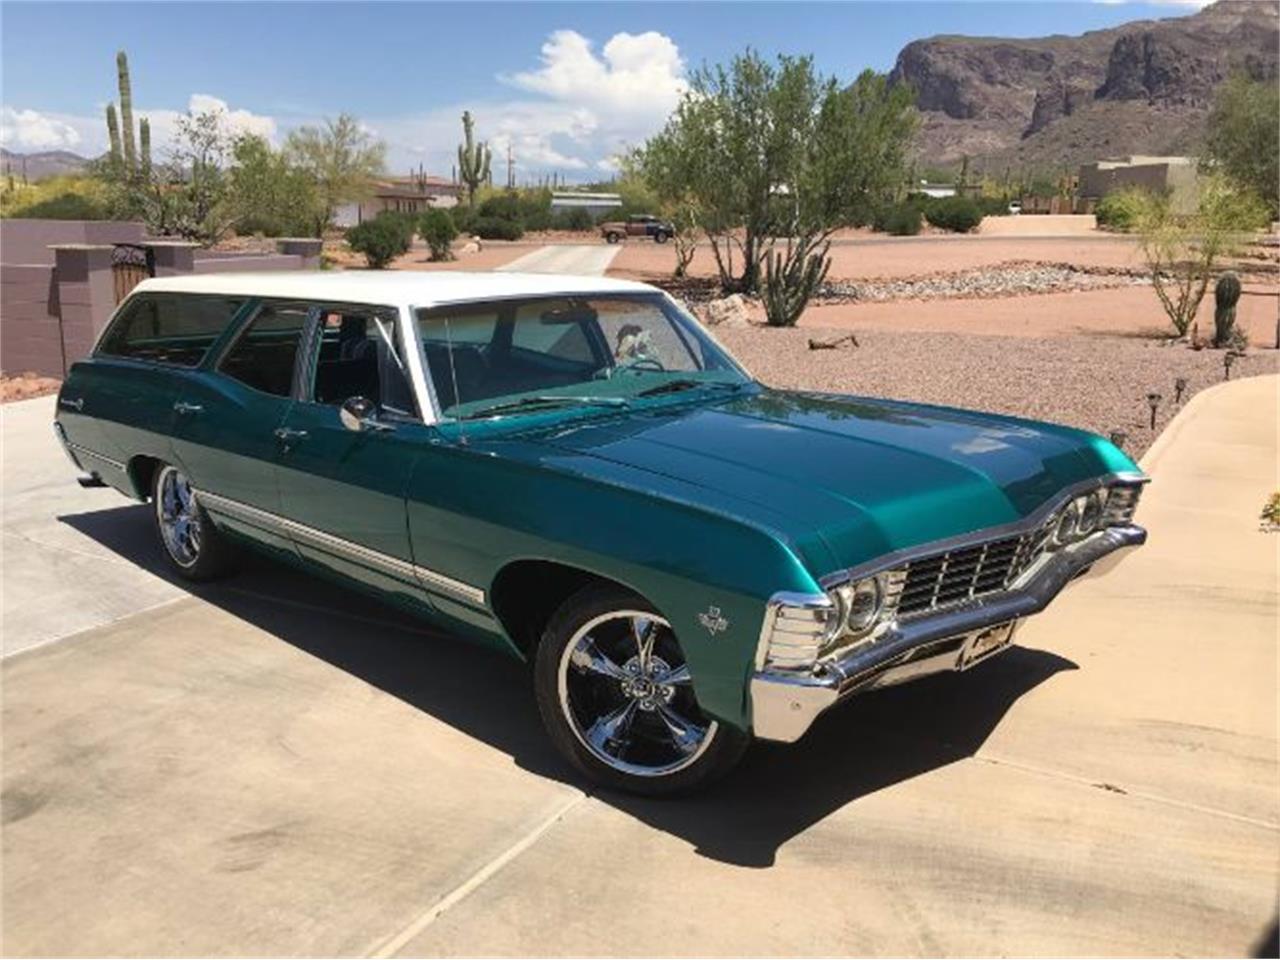 For Sale: 1967 Chevrolet Impala in Cadillac, Michigan.